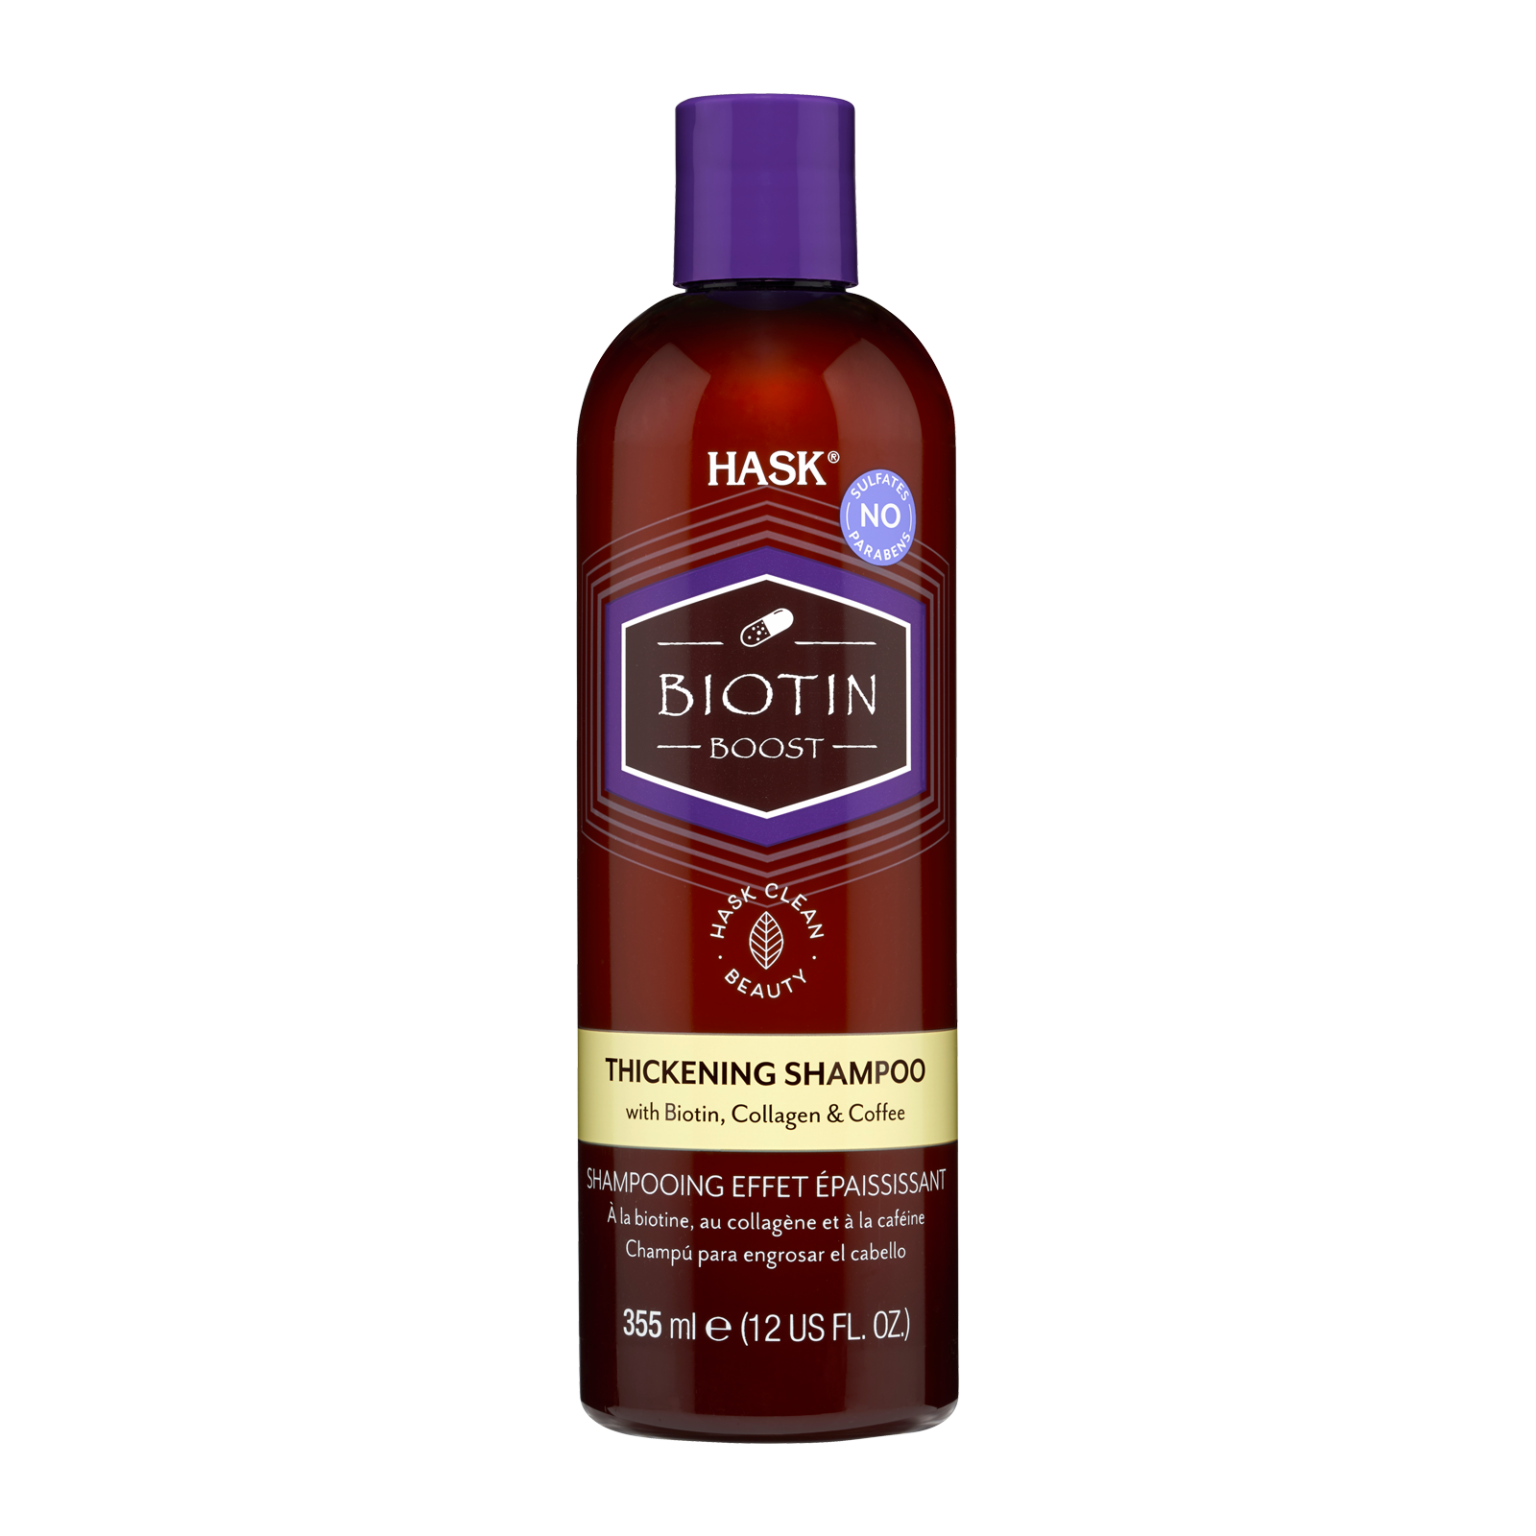 HASK BIOTIN BOOST – Thickening Shampoo (Shampooing Effet épaississant) 355 mL